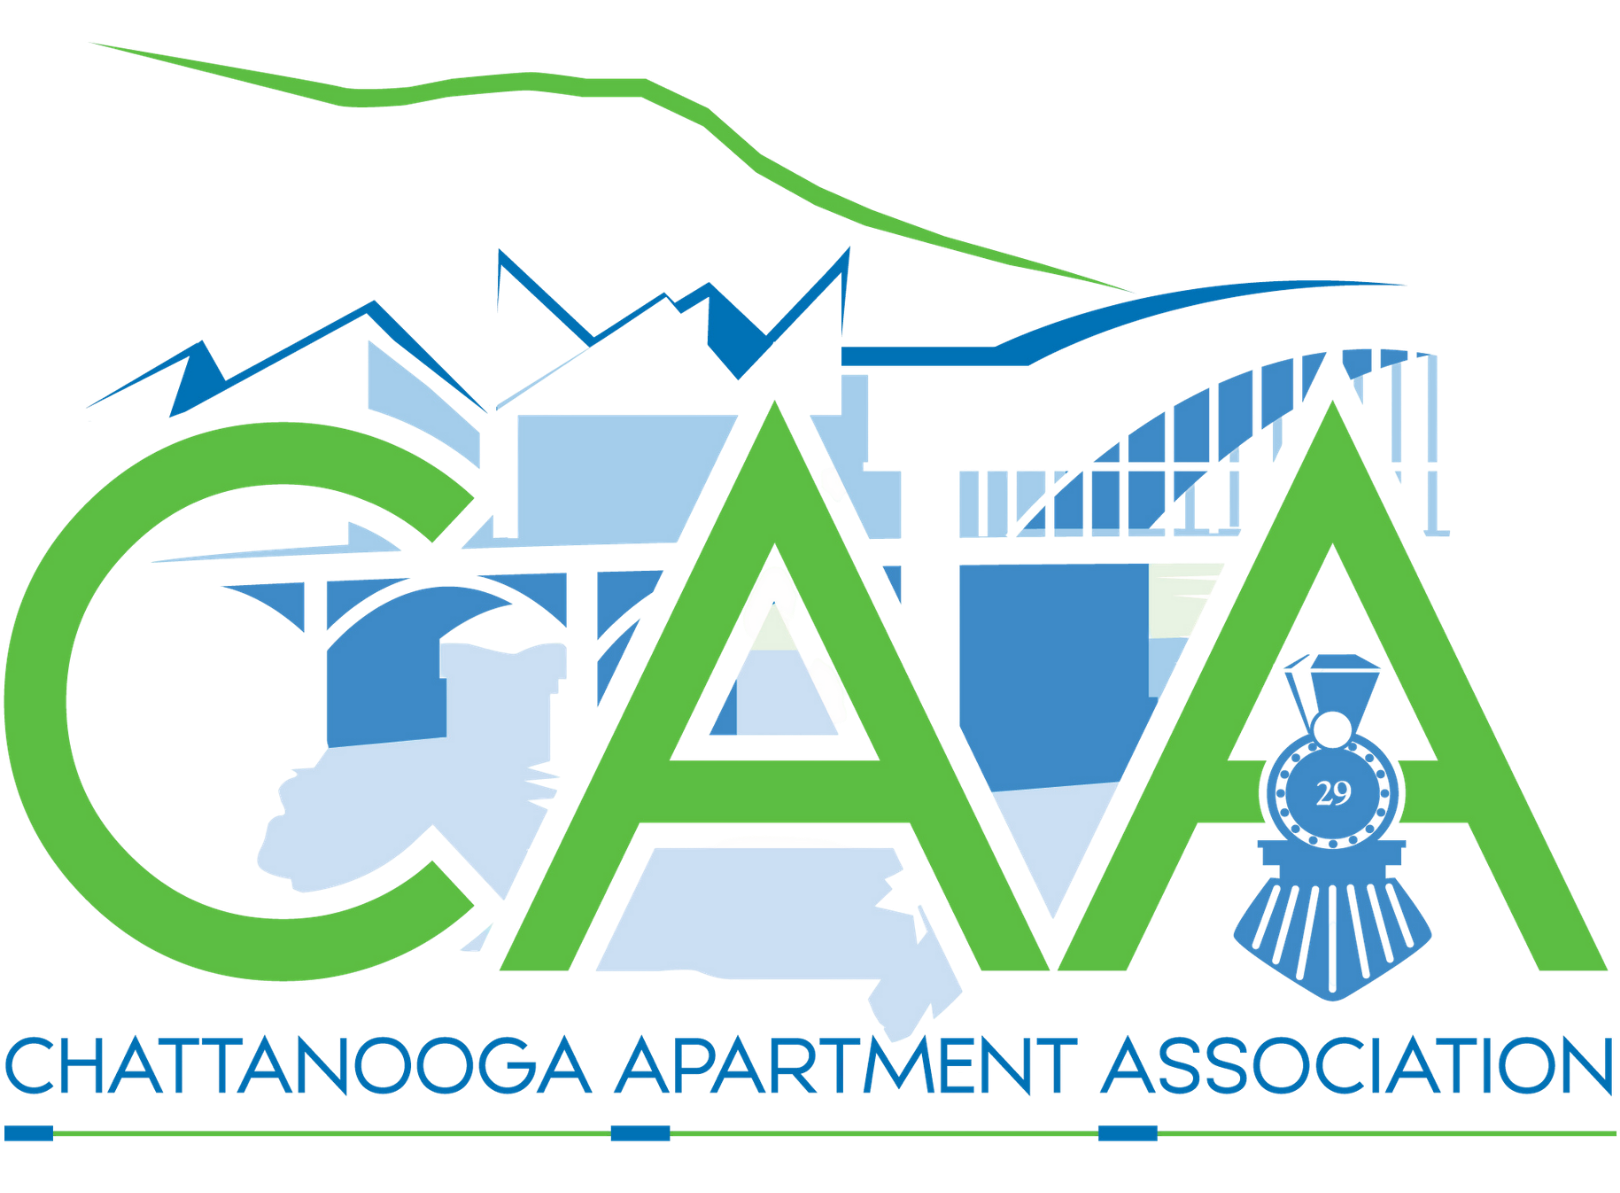 Chattanooga Apartment Association